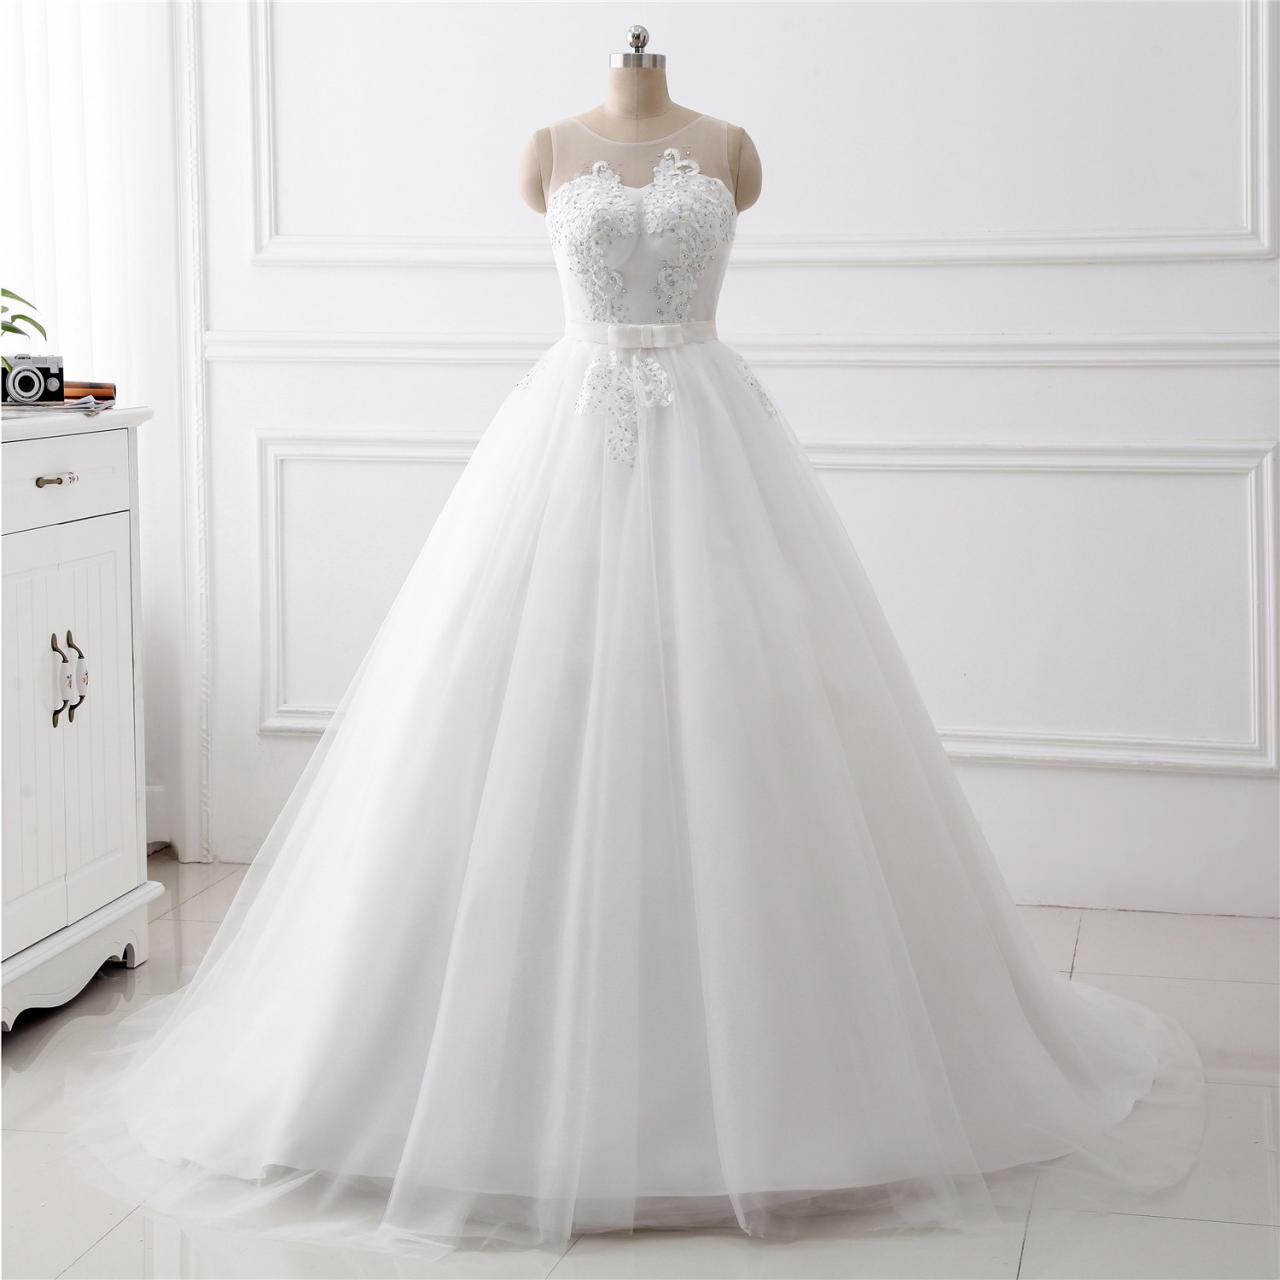 A-line Lace Applique Wedding Dress ,sexy O Neck Wedding Dress With Bow Knot , Luxury Simple Sleeveless Wedding Dress, Floor Length Bridal Dress,